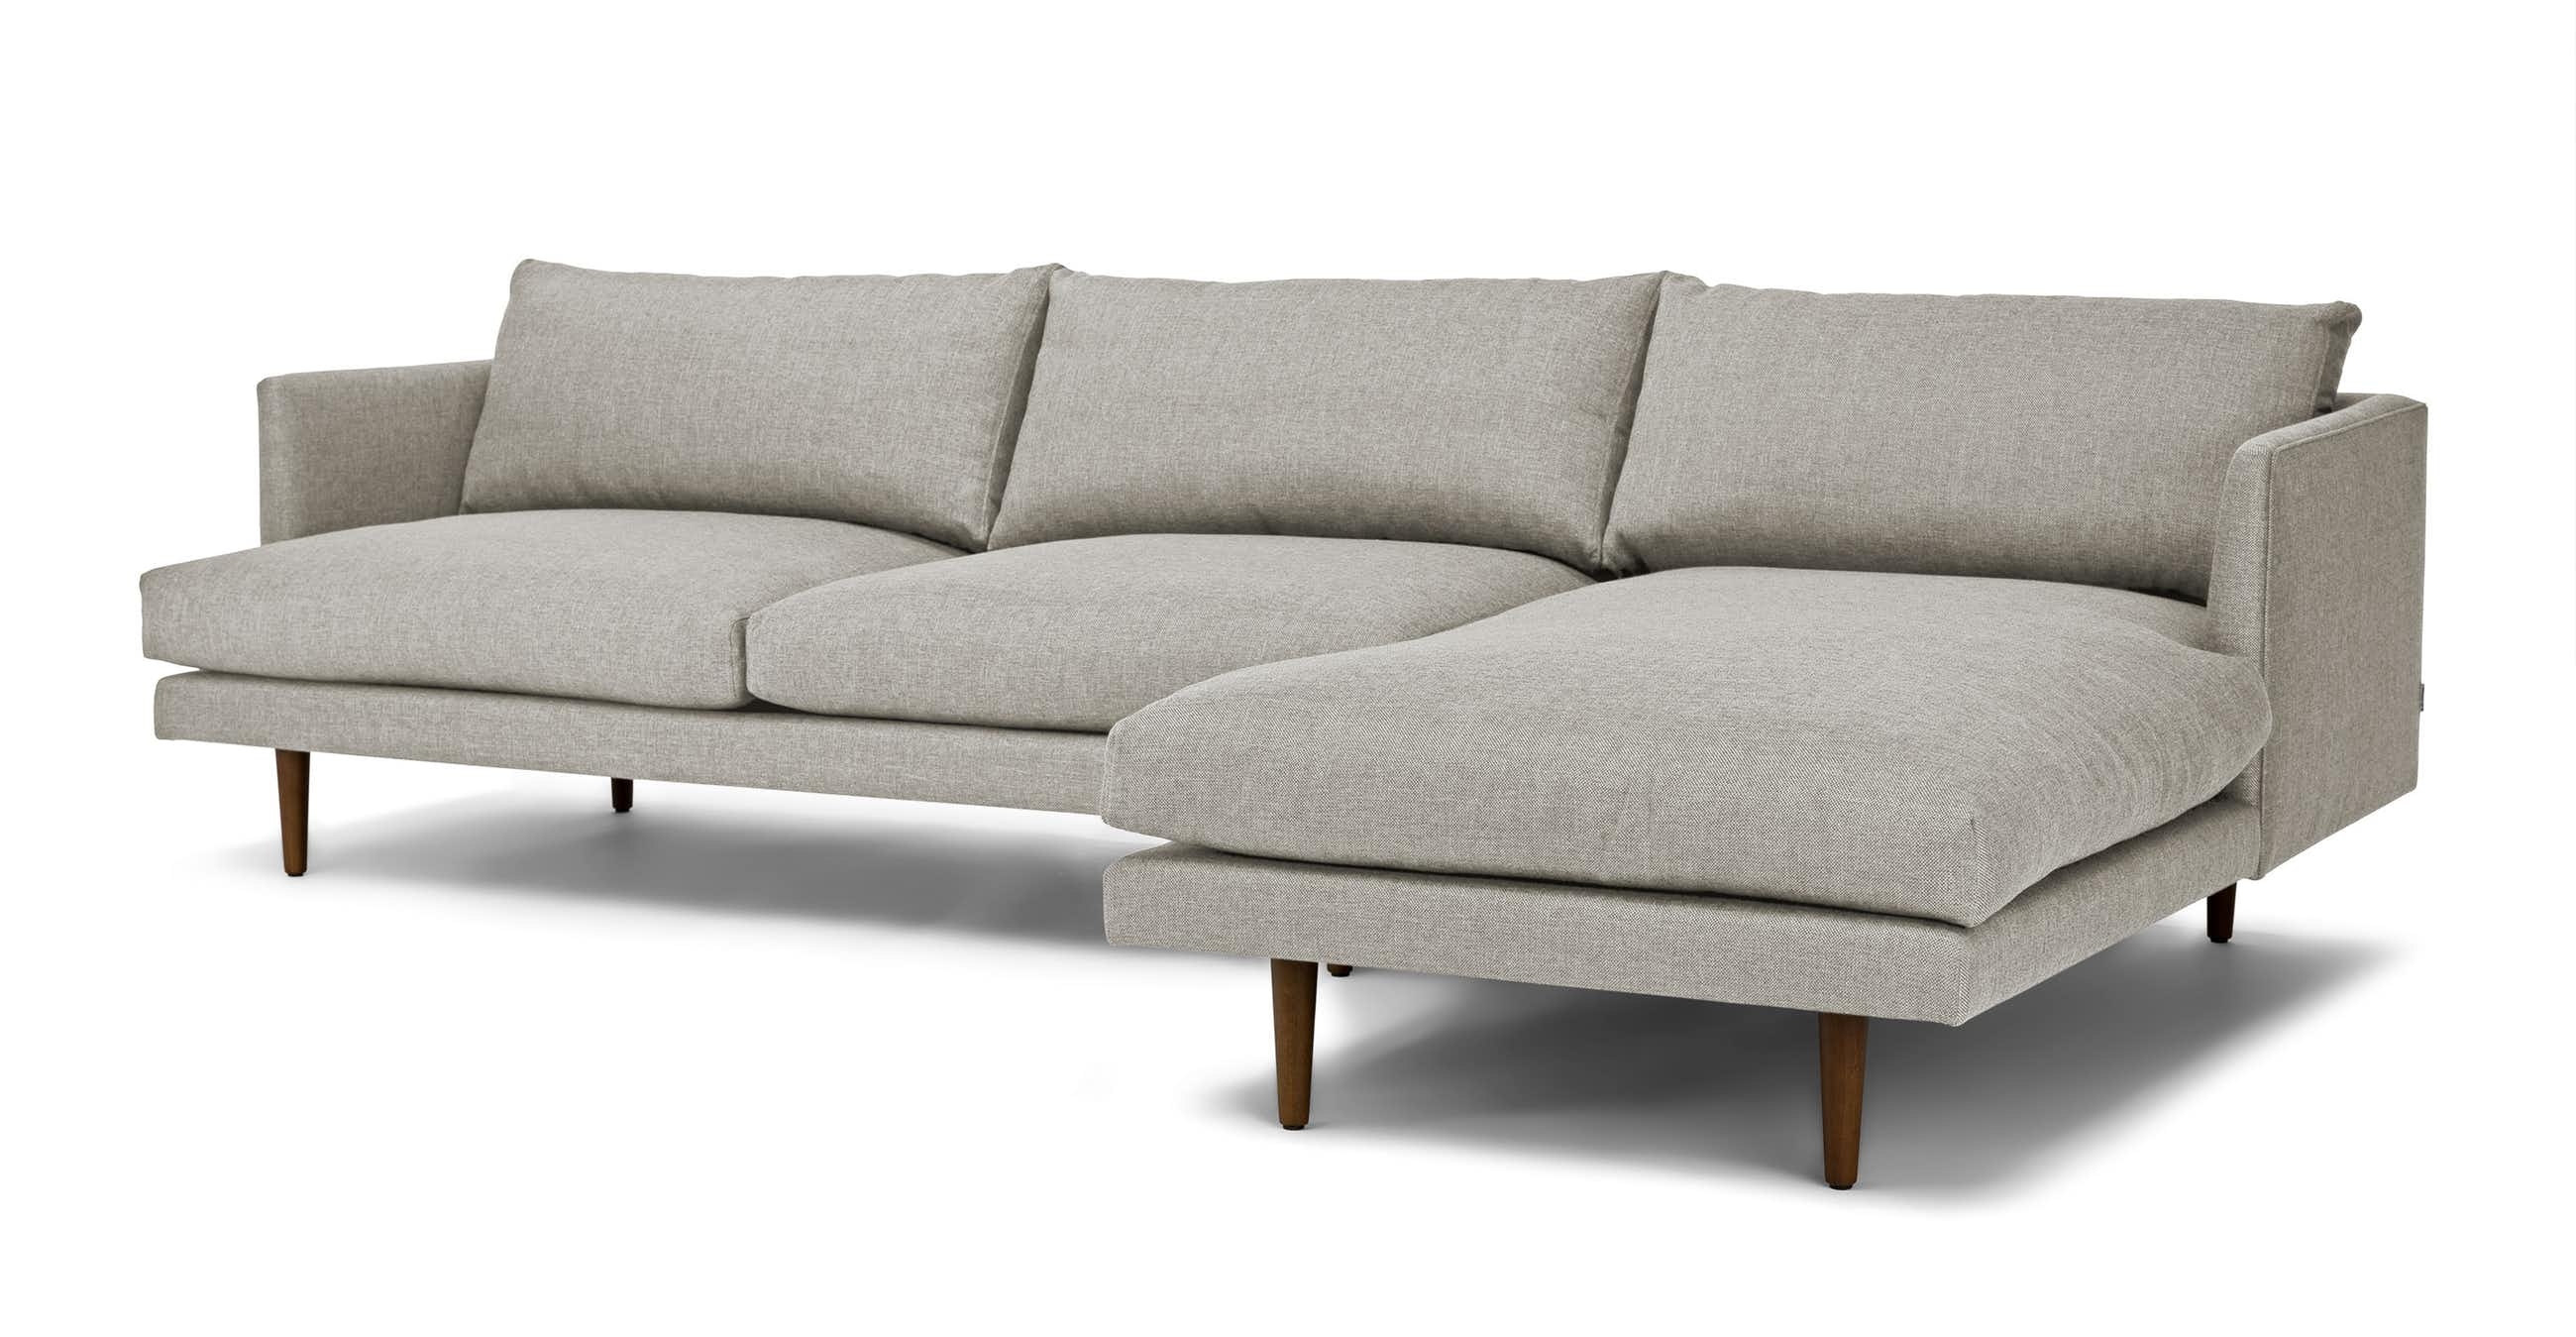 Burrard Seasalt Gray Right Sectional Sofa - Image 2